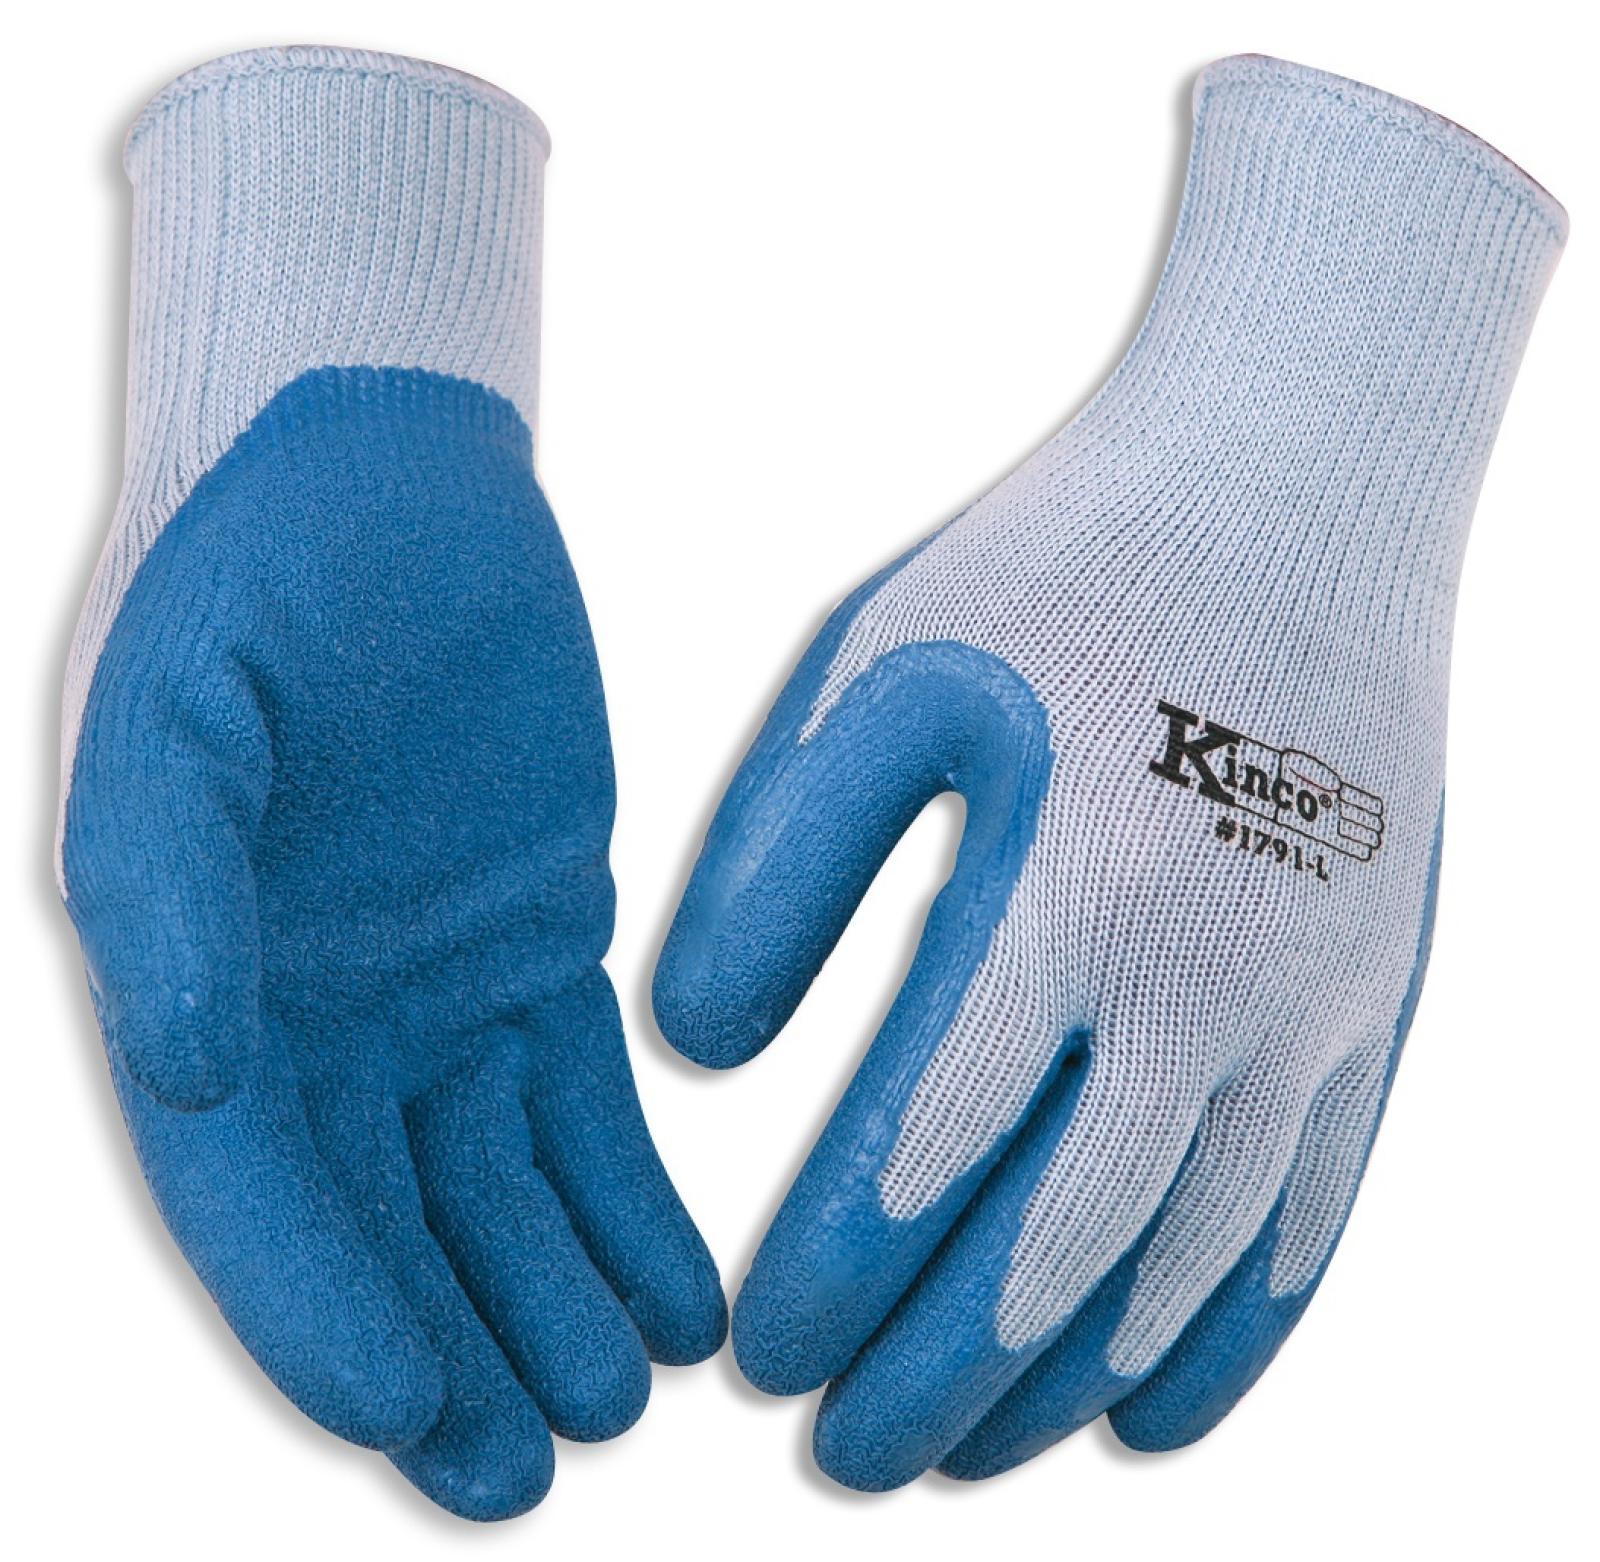 Kinco Mens Glove Latex Palm 12 Pack 